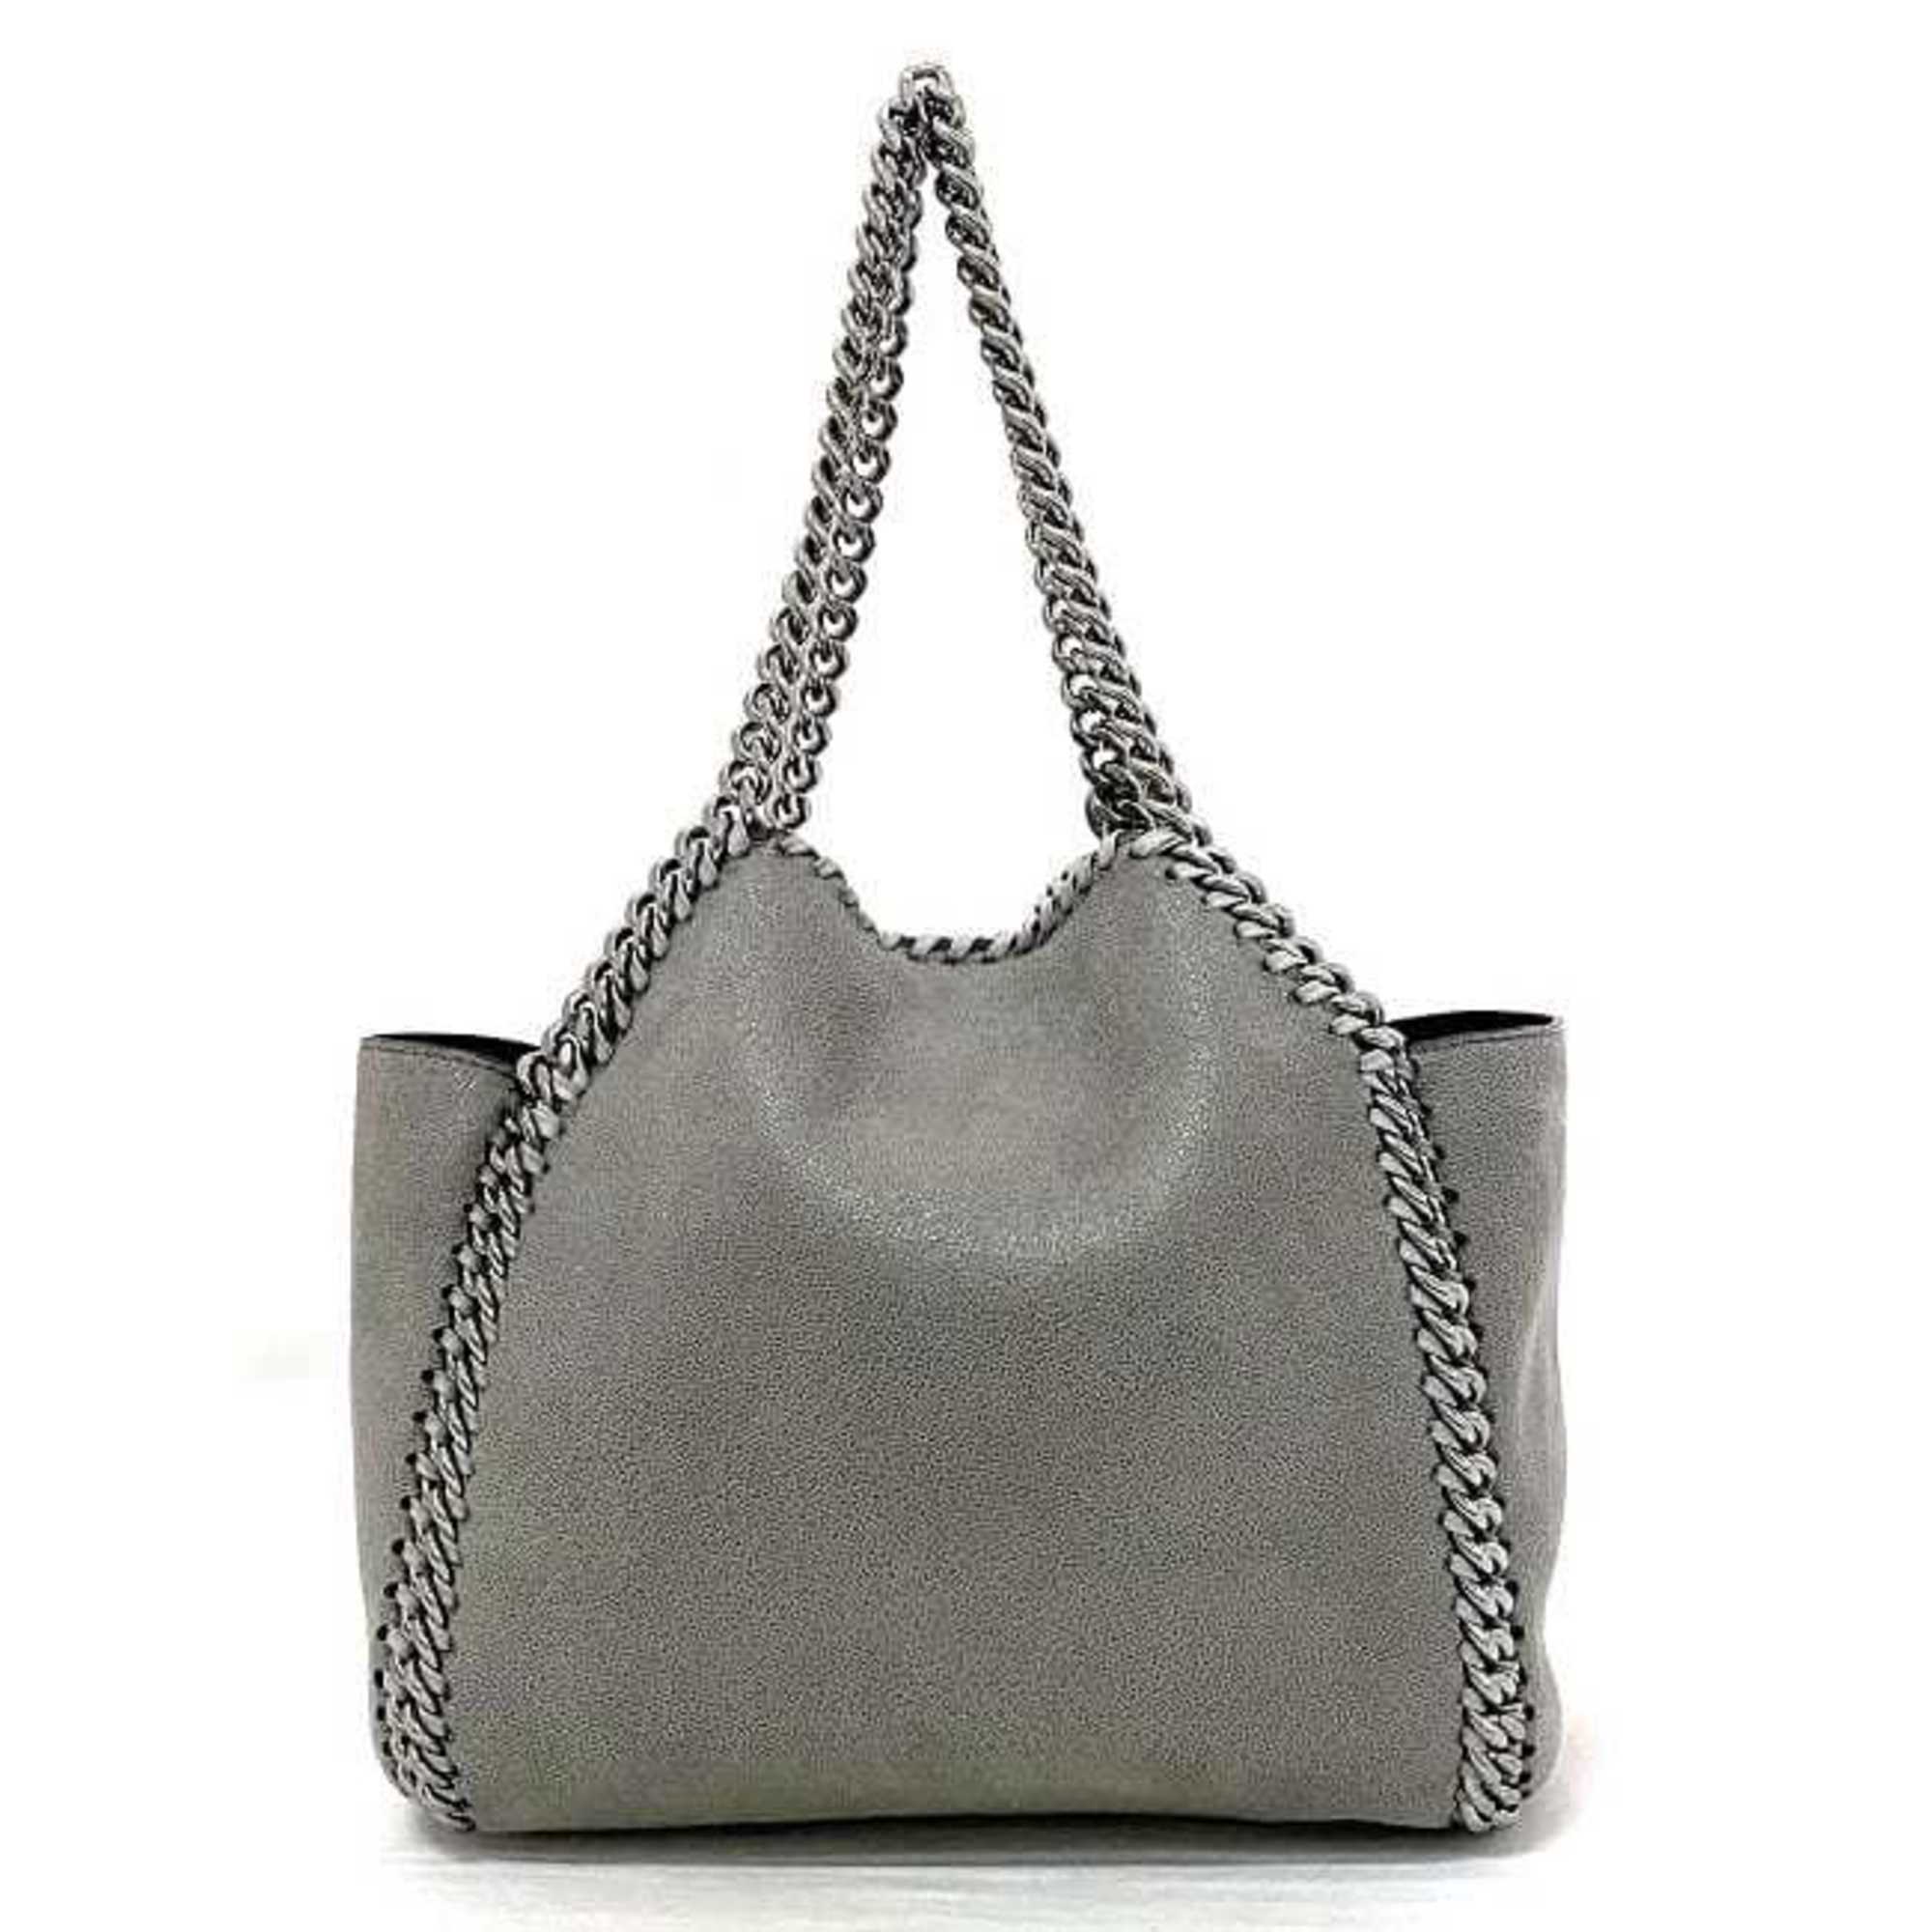 Stella McCartney 2way Bag Gray Silver Falabella 529282 Polyester Metal STELLA McCARTNEY Chain Tote Shoulder